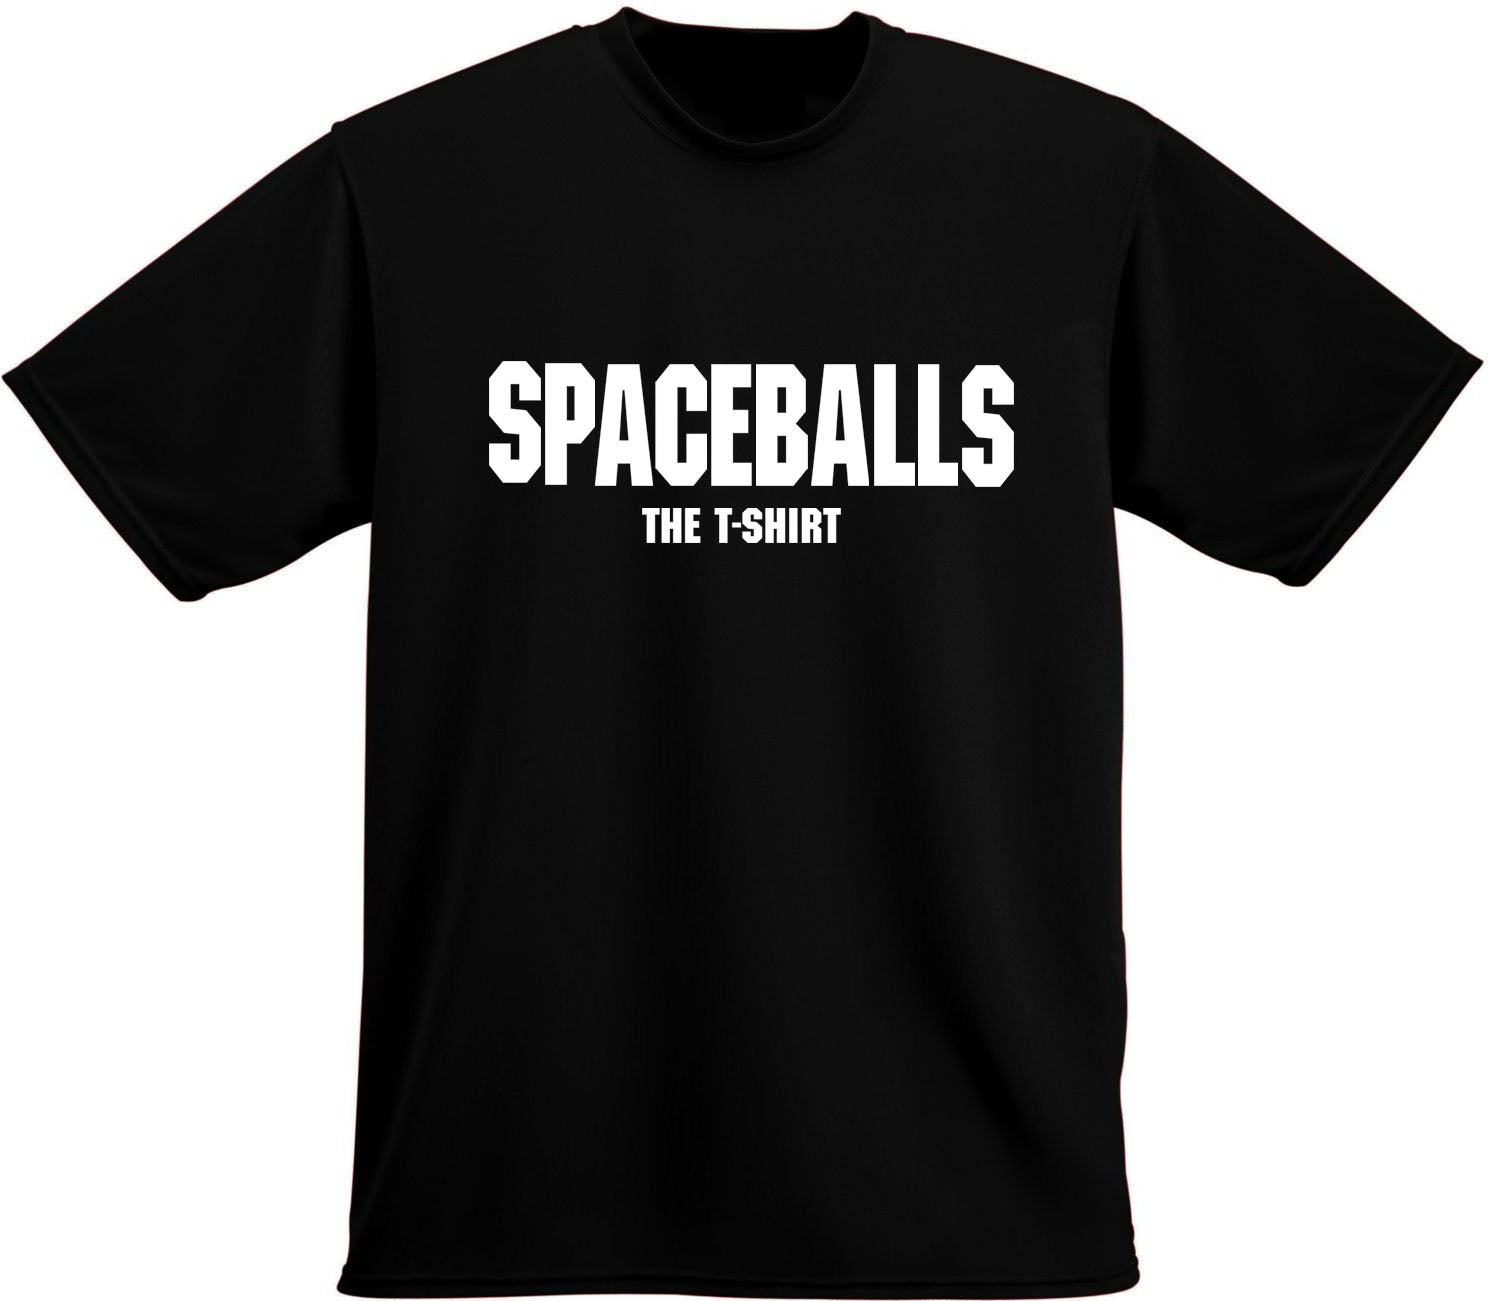 spaceballs motivational posters